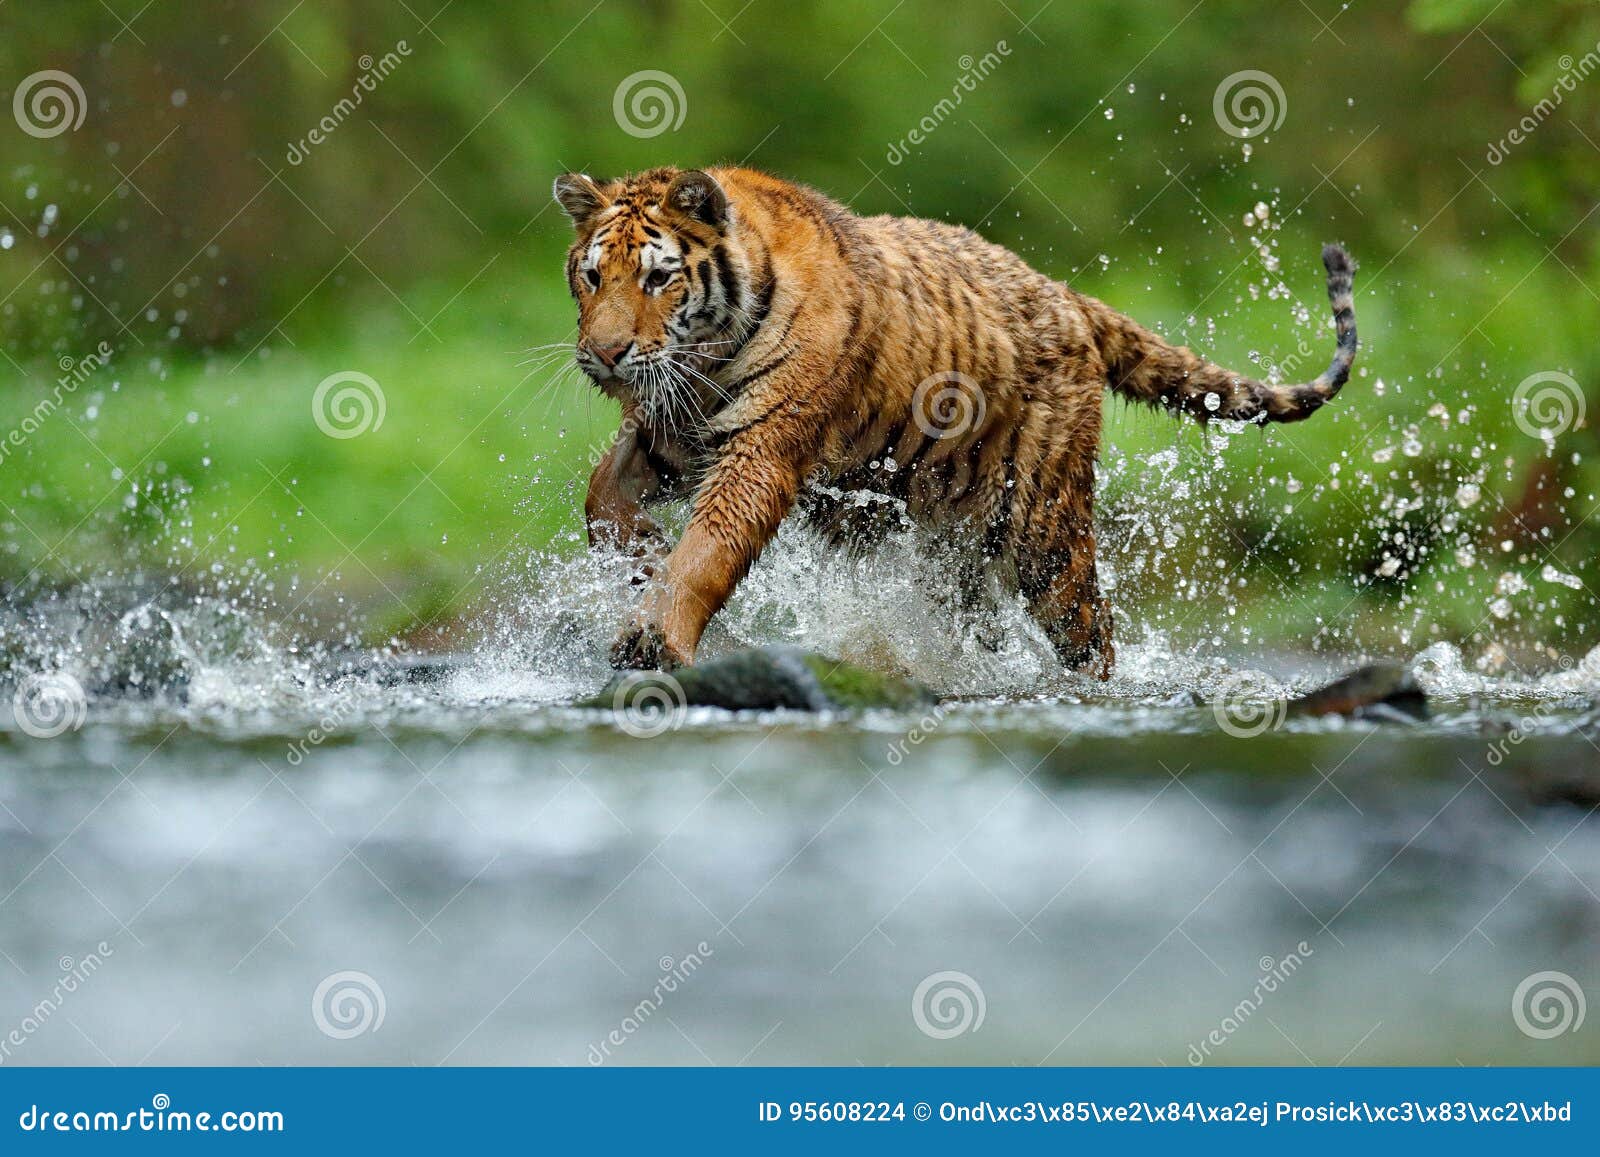 tiger with splash river water. tiger action wildlife scene, wild cat, nature habitat. tiger running in water. danger animal, tajga